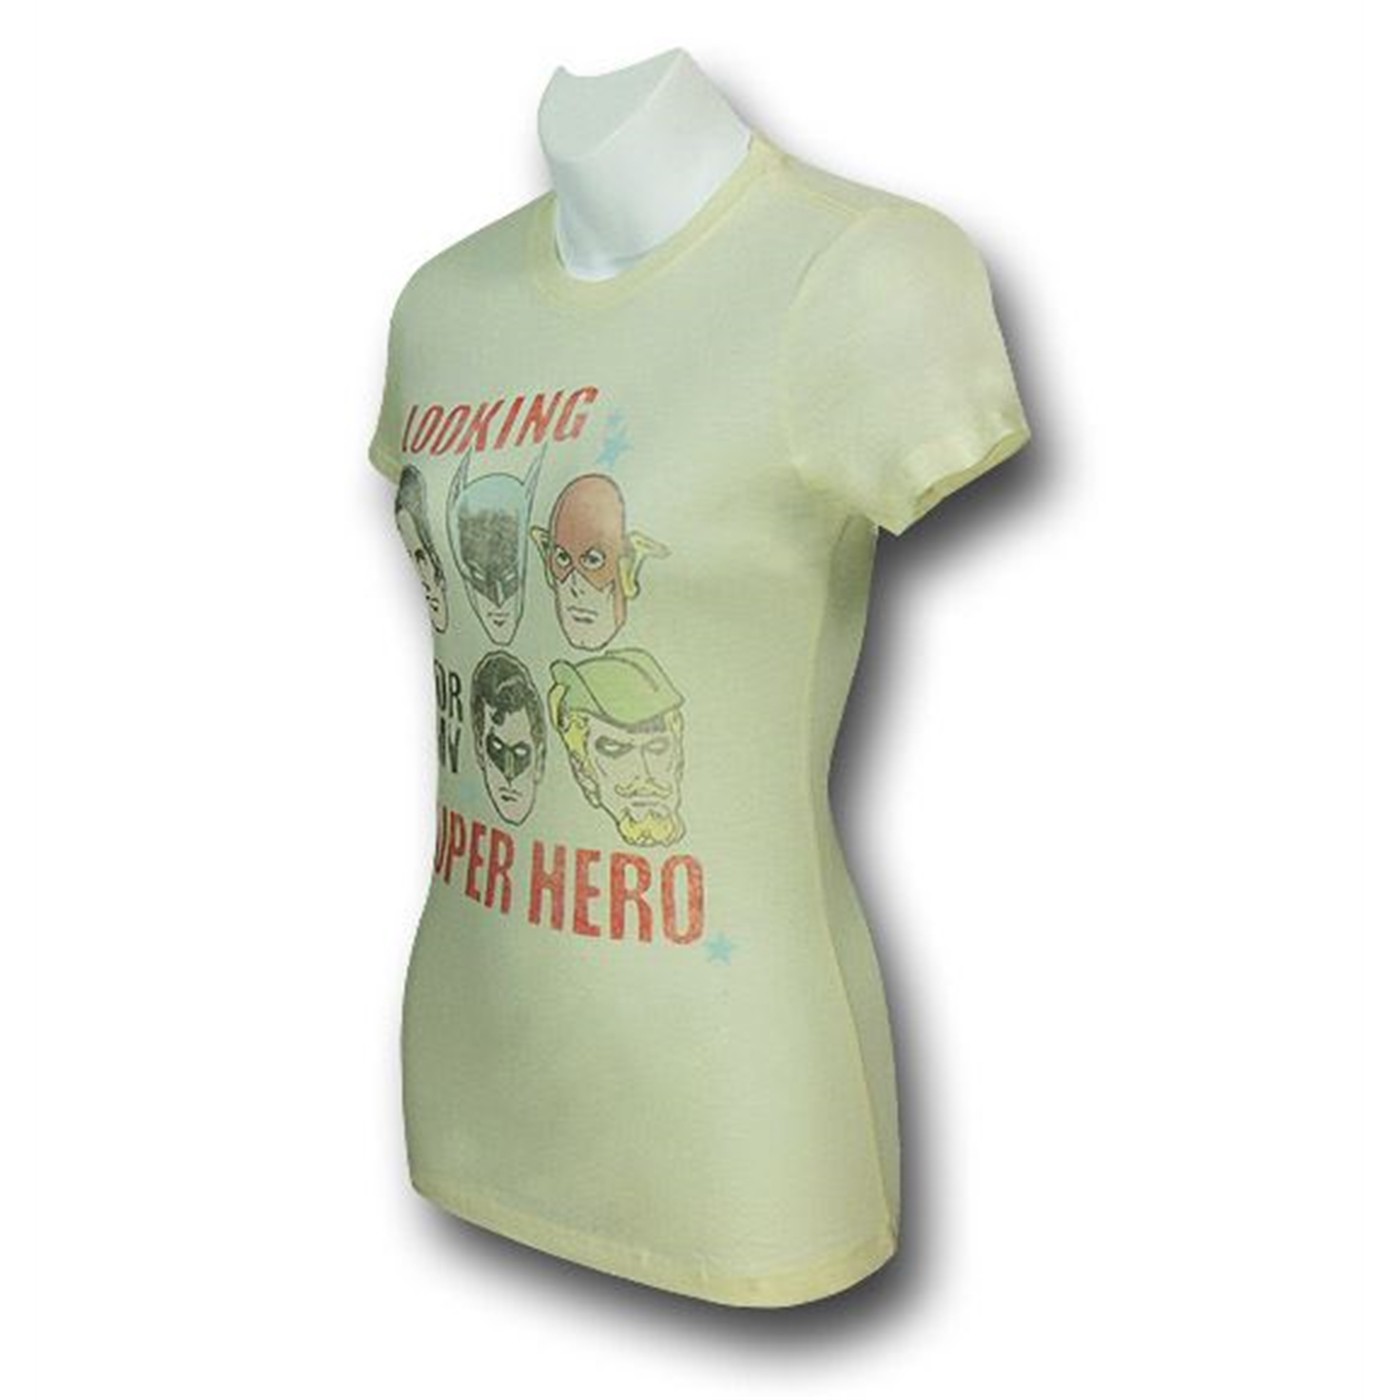 JLA Looking For My Hero Women's T-Shirt